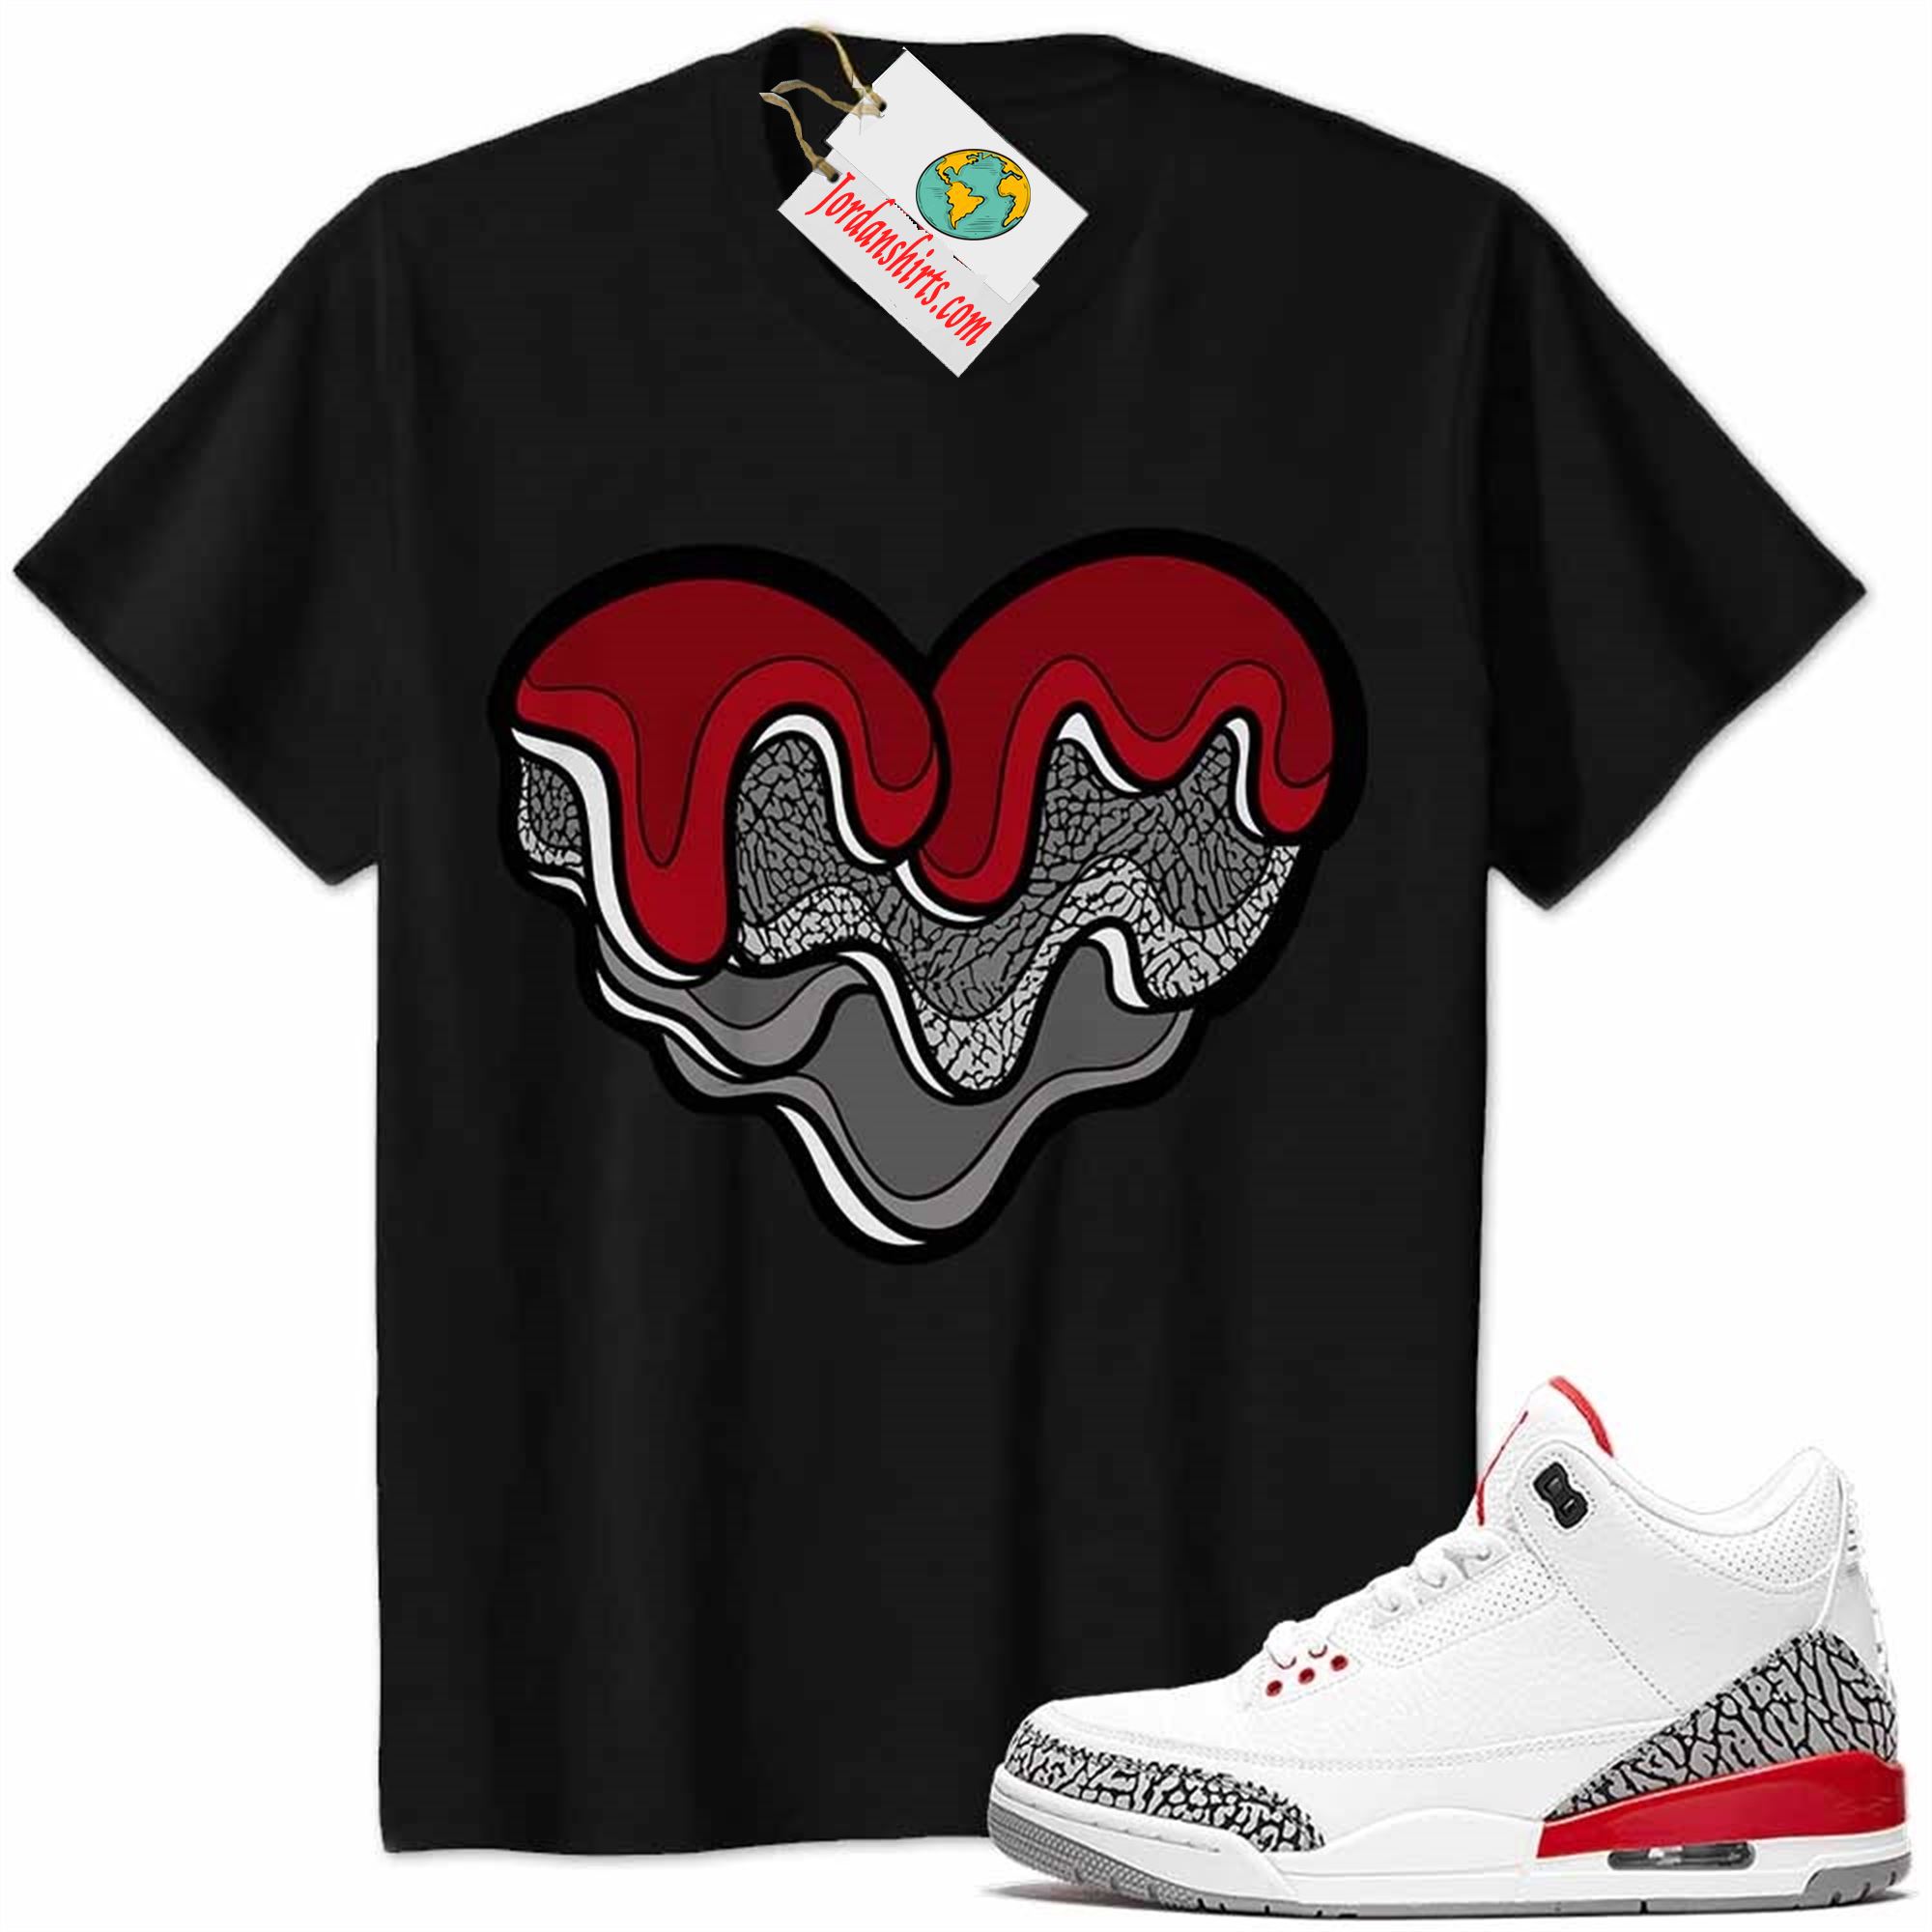 Jordan 3 Shirt, Melt Dripping Heart Black Air Jordan 3 Katrina 3s Size Up To 5xl